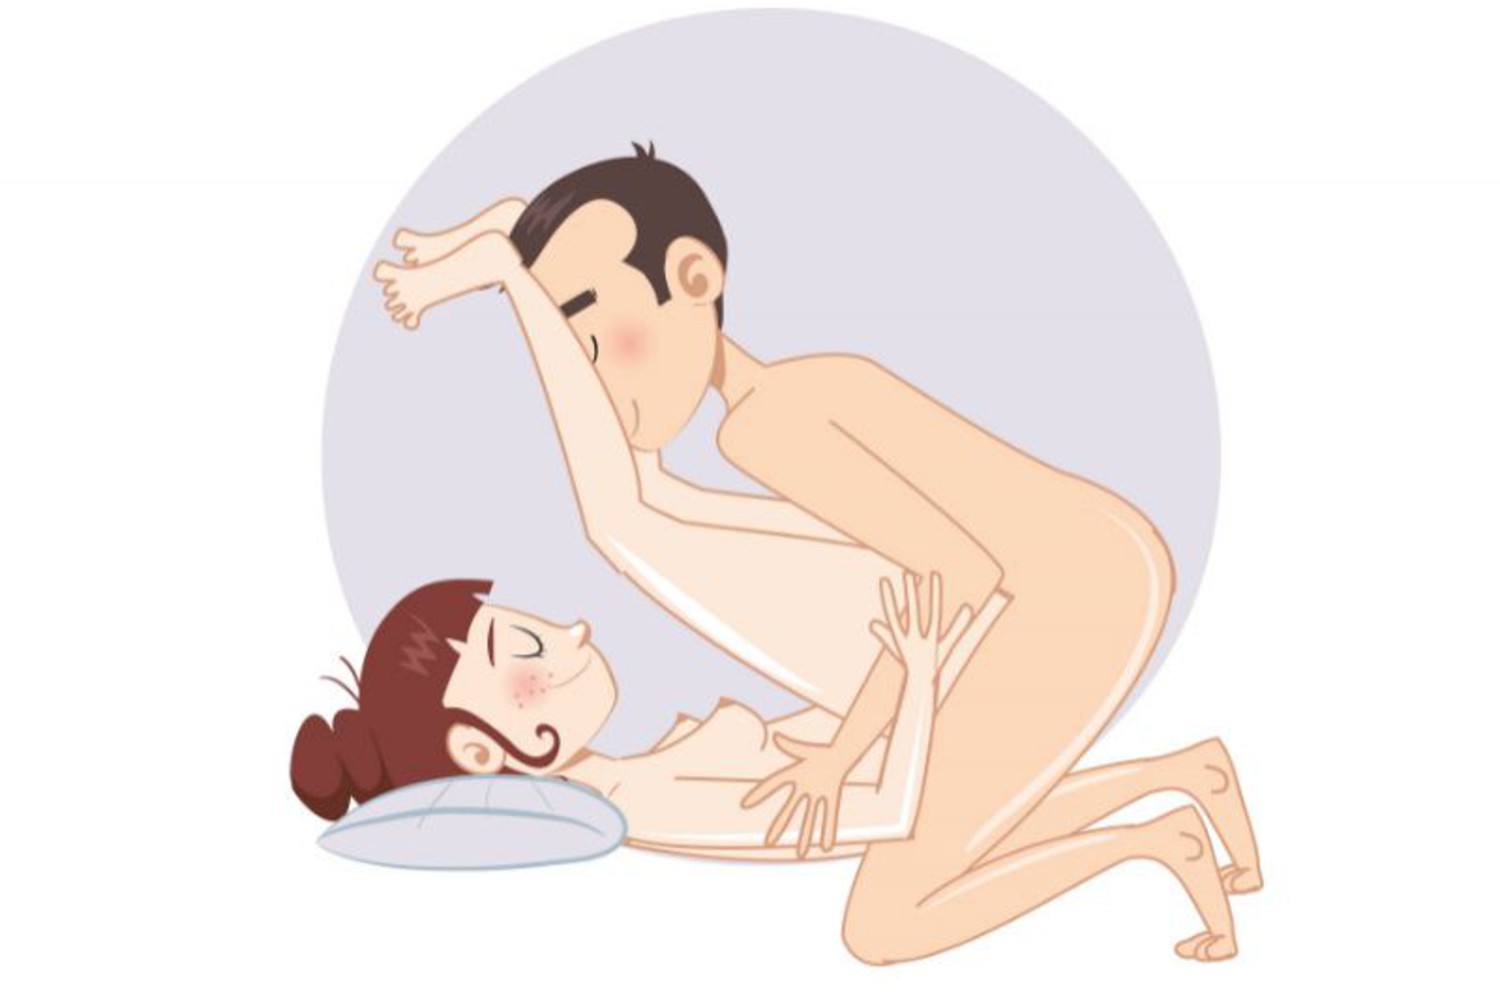 The Rock 'n' Roller Sex Position